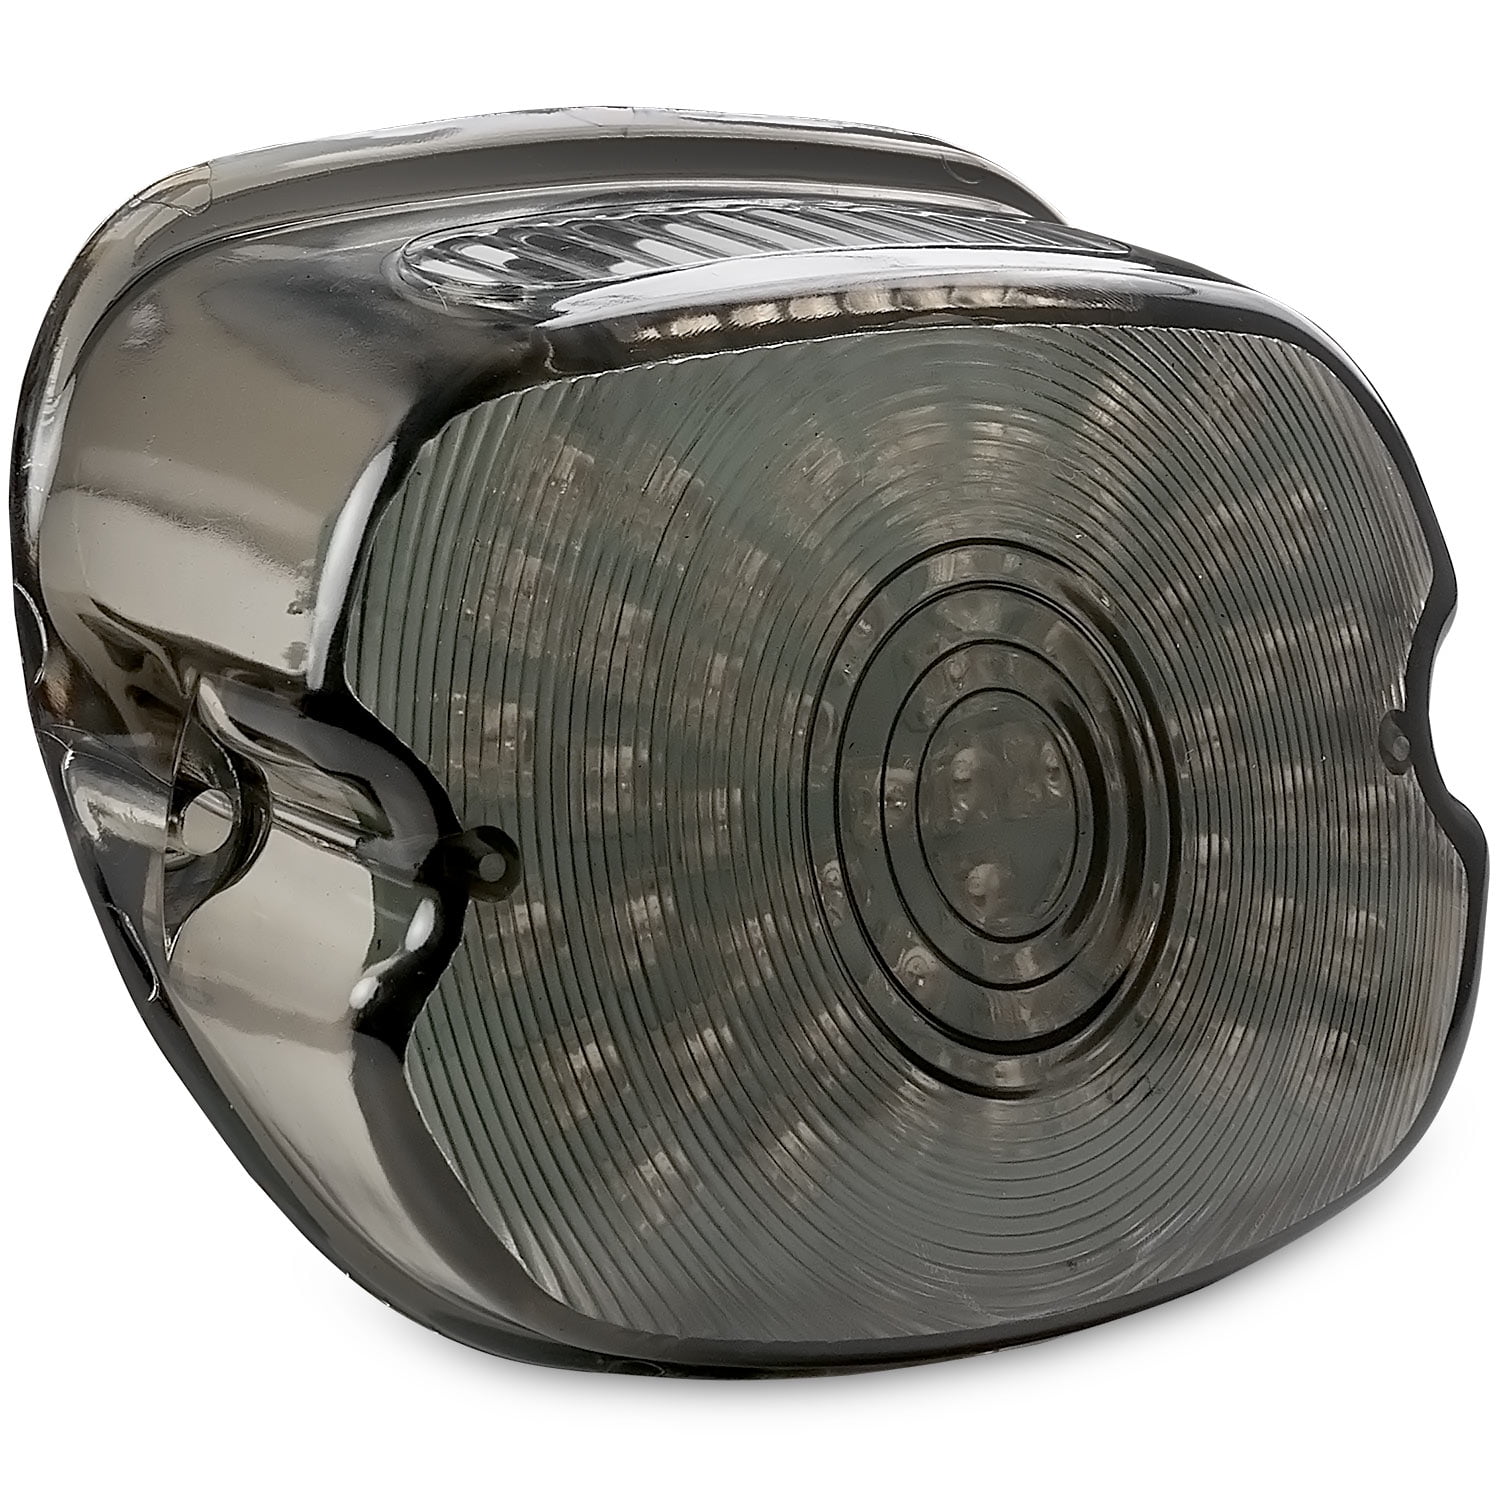 Motor Smoke Side Light Lens Cover For Harley Electra Glide Ultra Limited FLHTK 